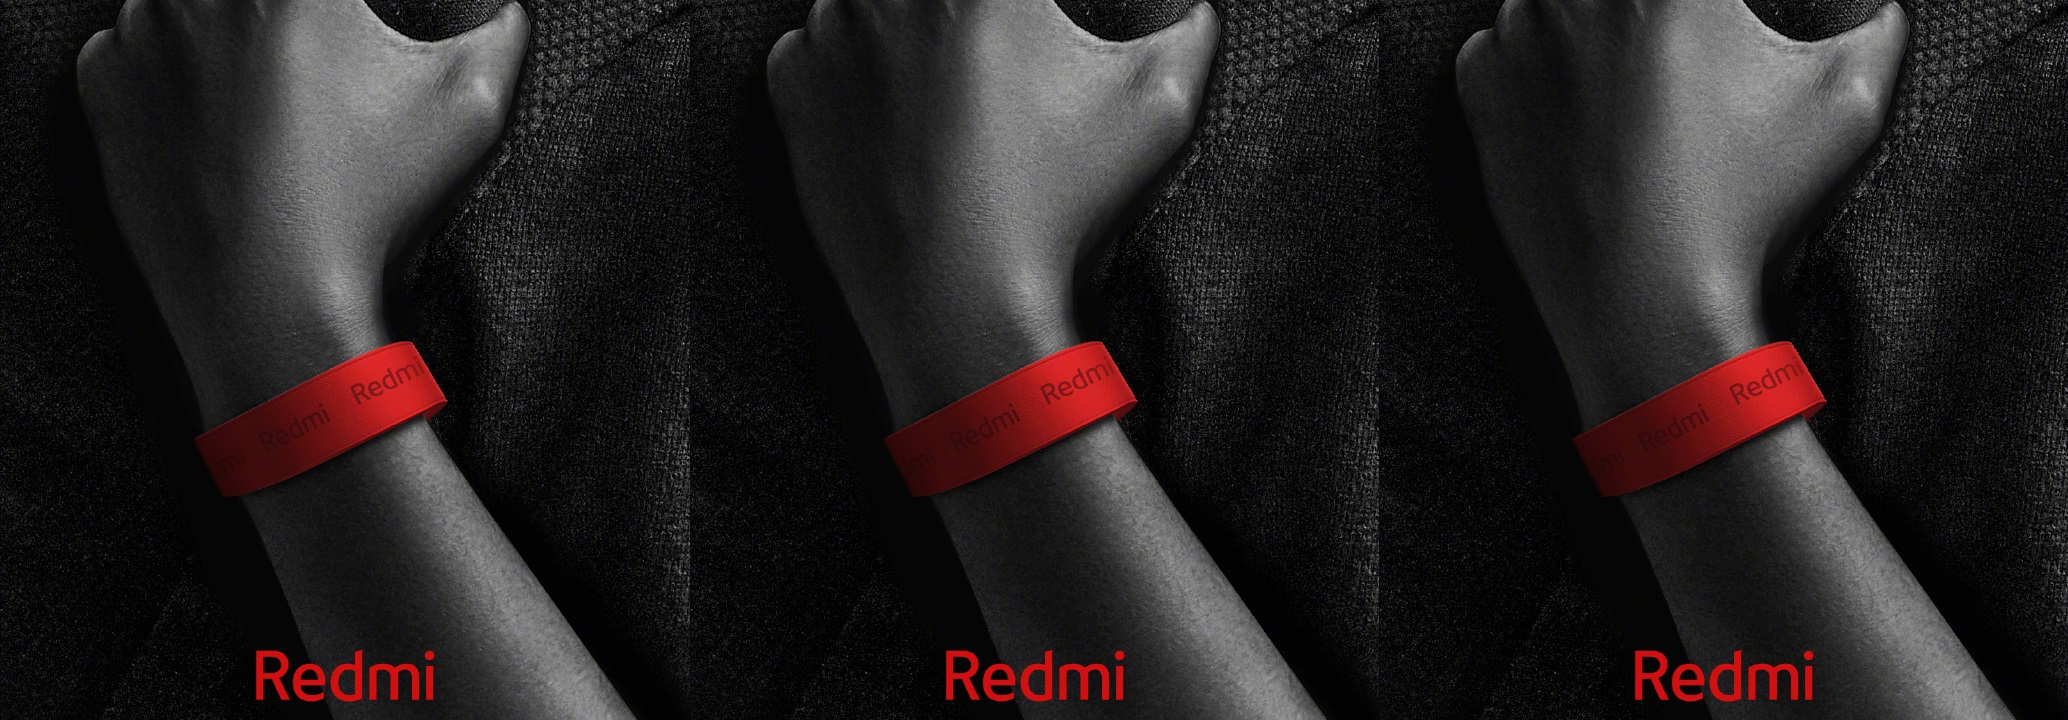 Redmi Band teaser